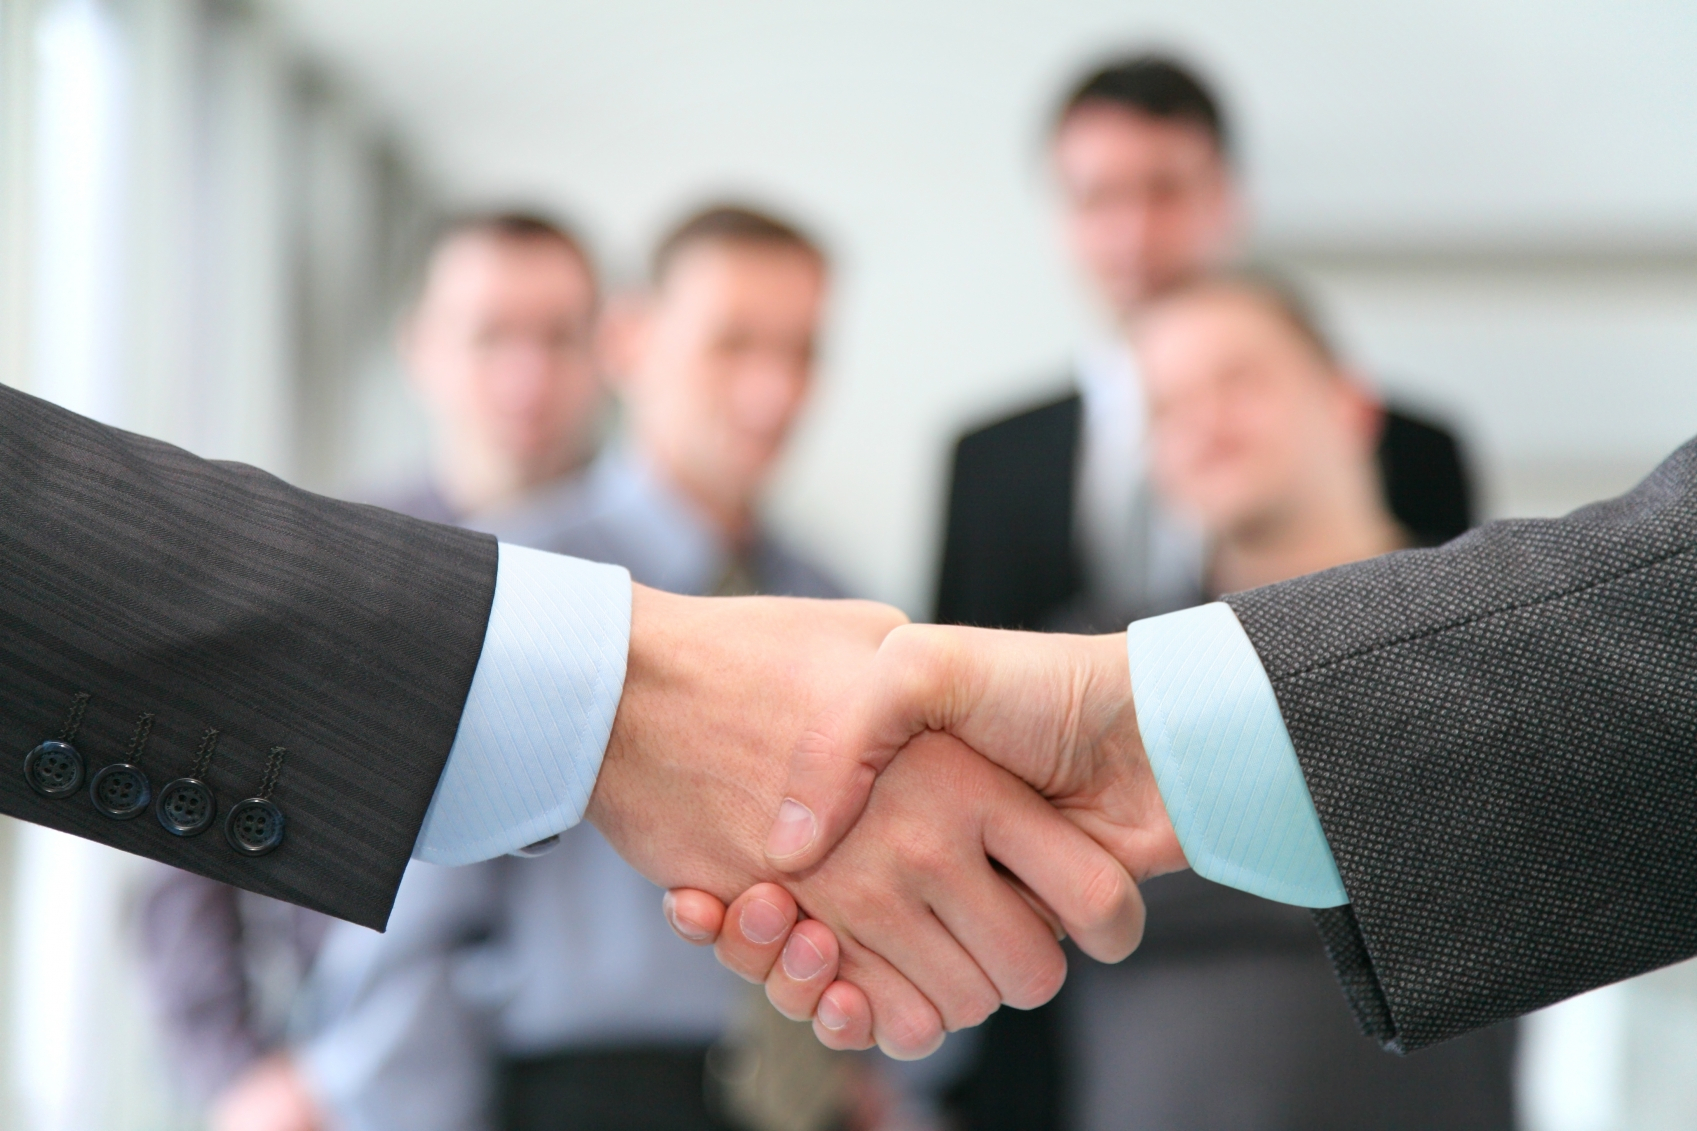 Sales Representative Agreement 7 Steps To Write A Sales Representative Agreement For Legal Protection